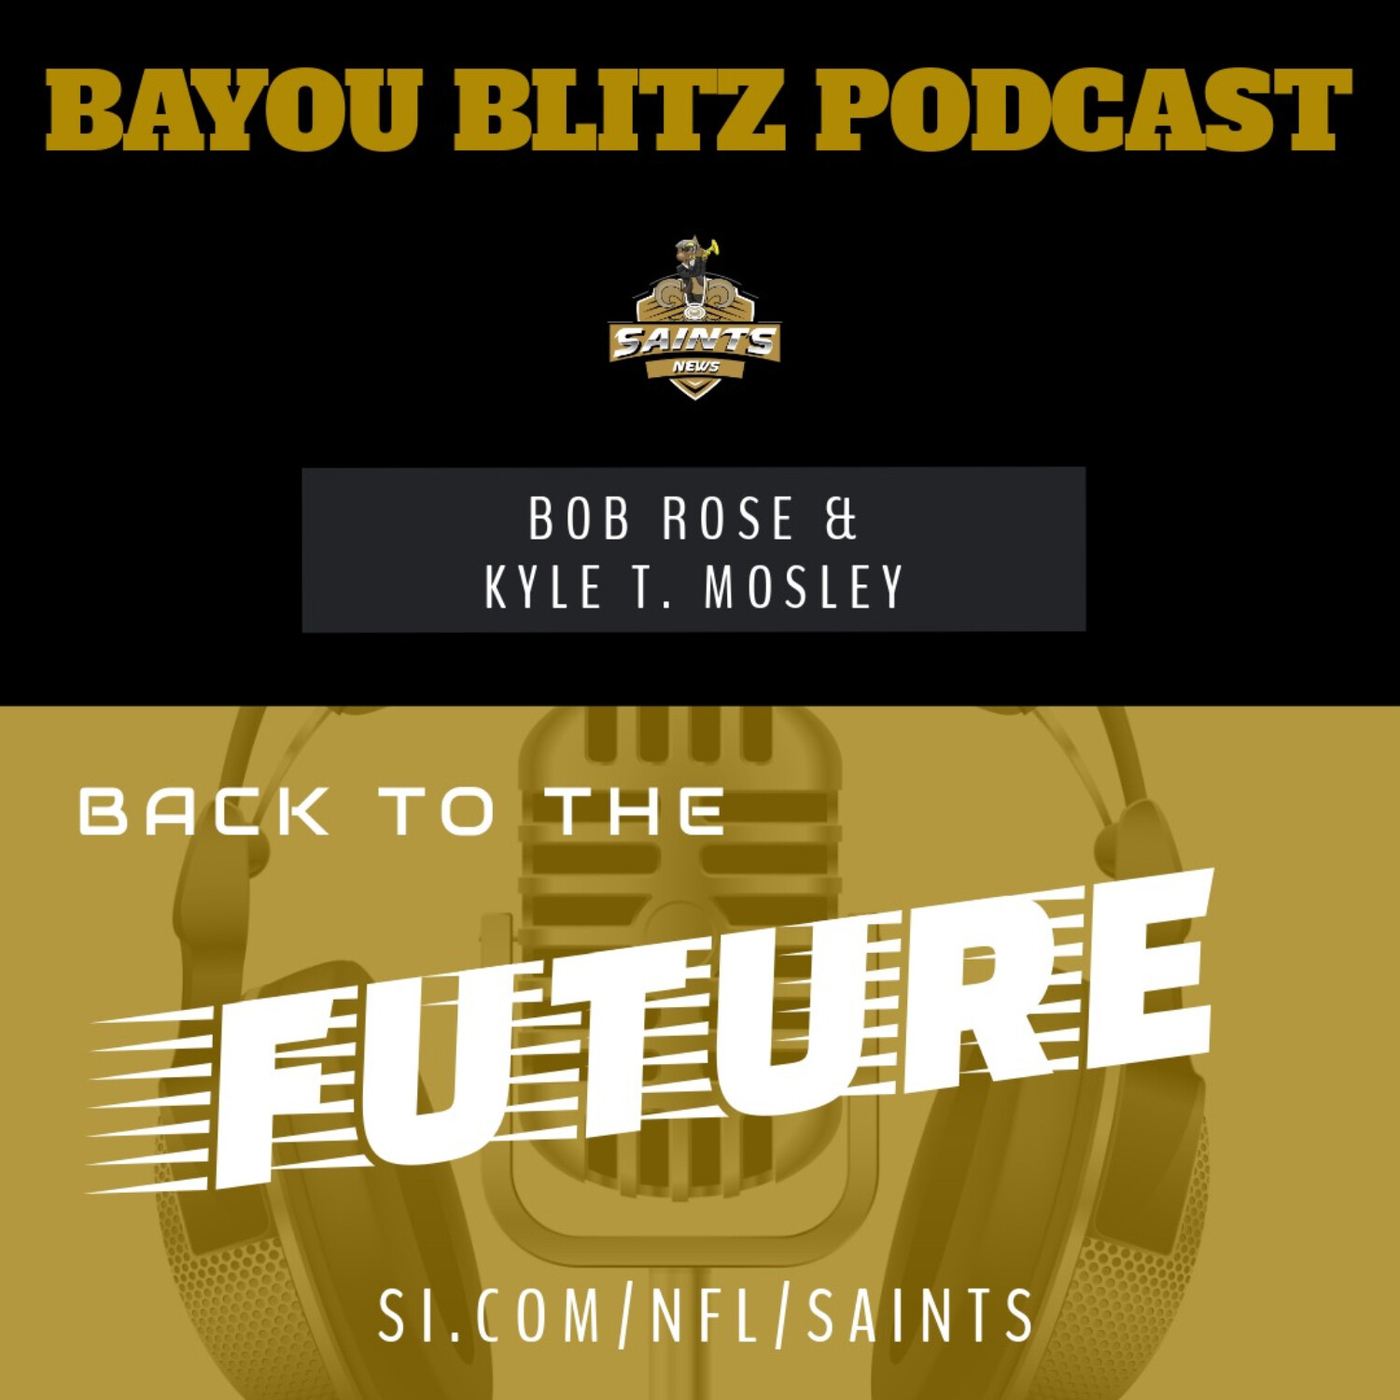 Bayou Blitz Podcast: Back to the Future